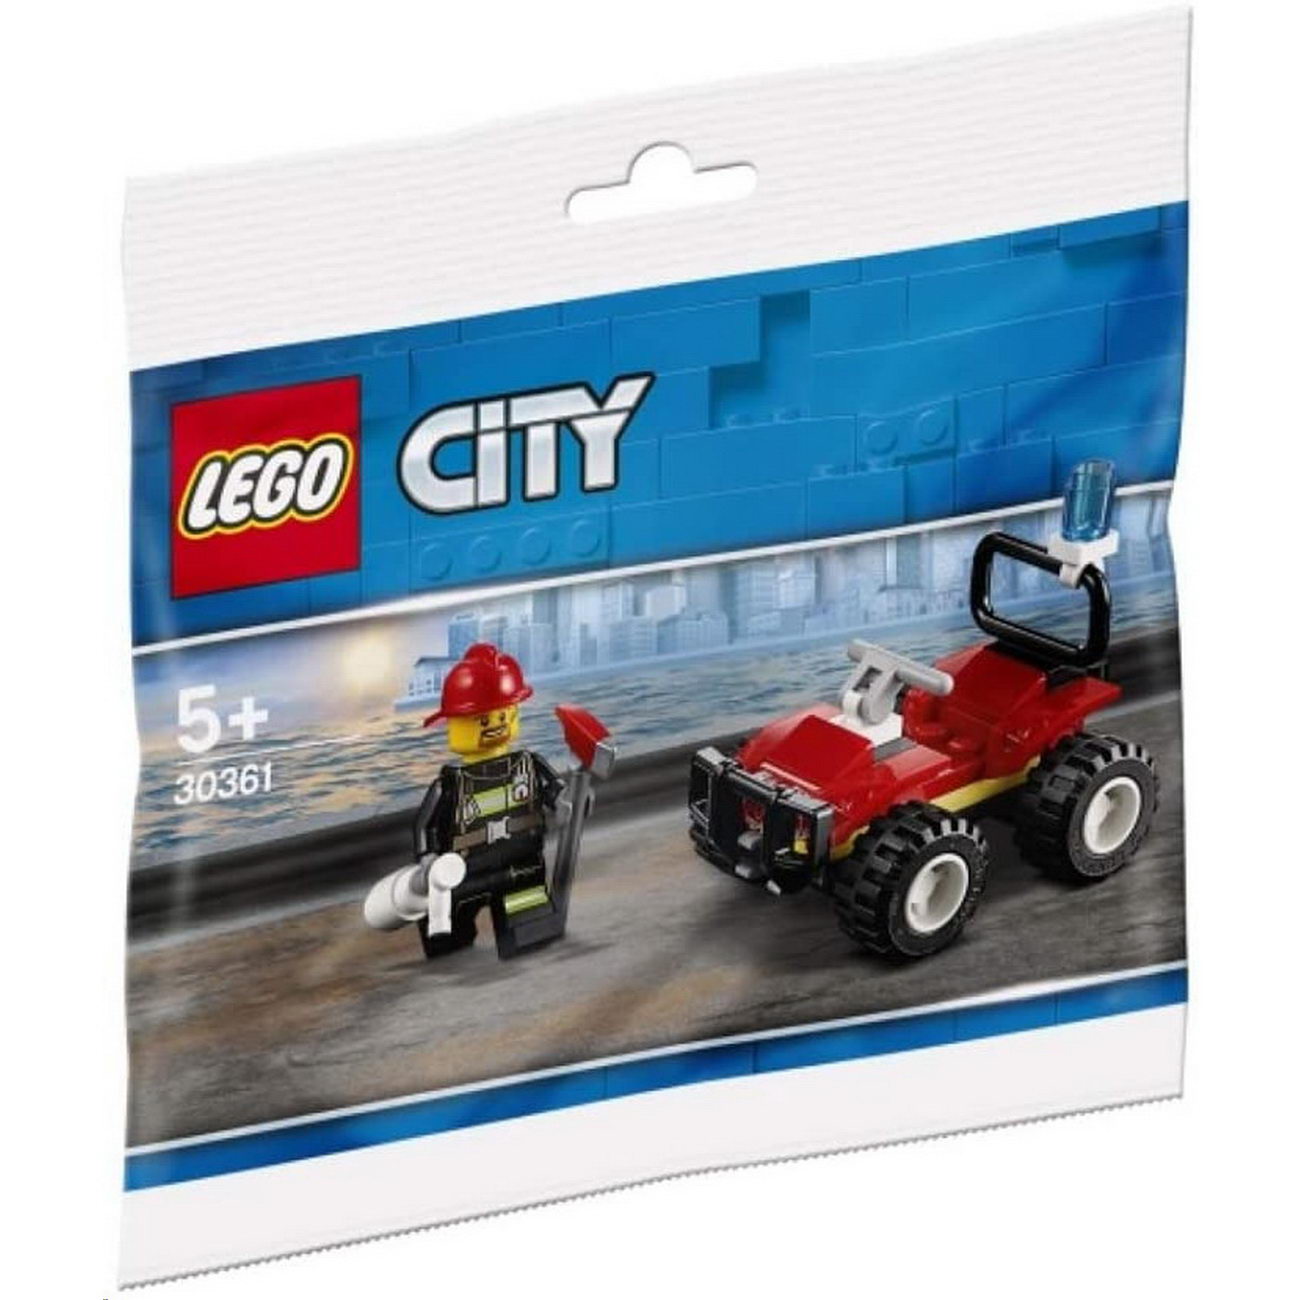 LEGO City 30361 Feuerwehr Buggy - Polybag